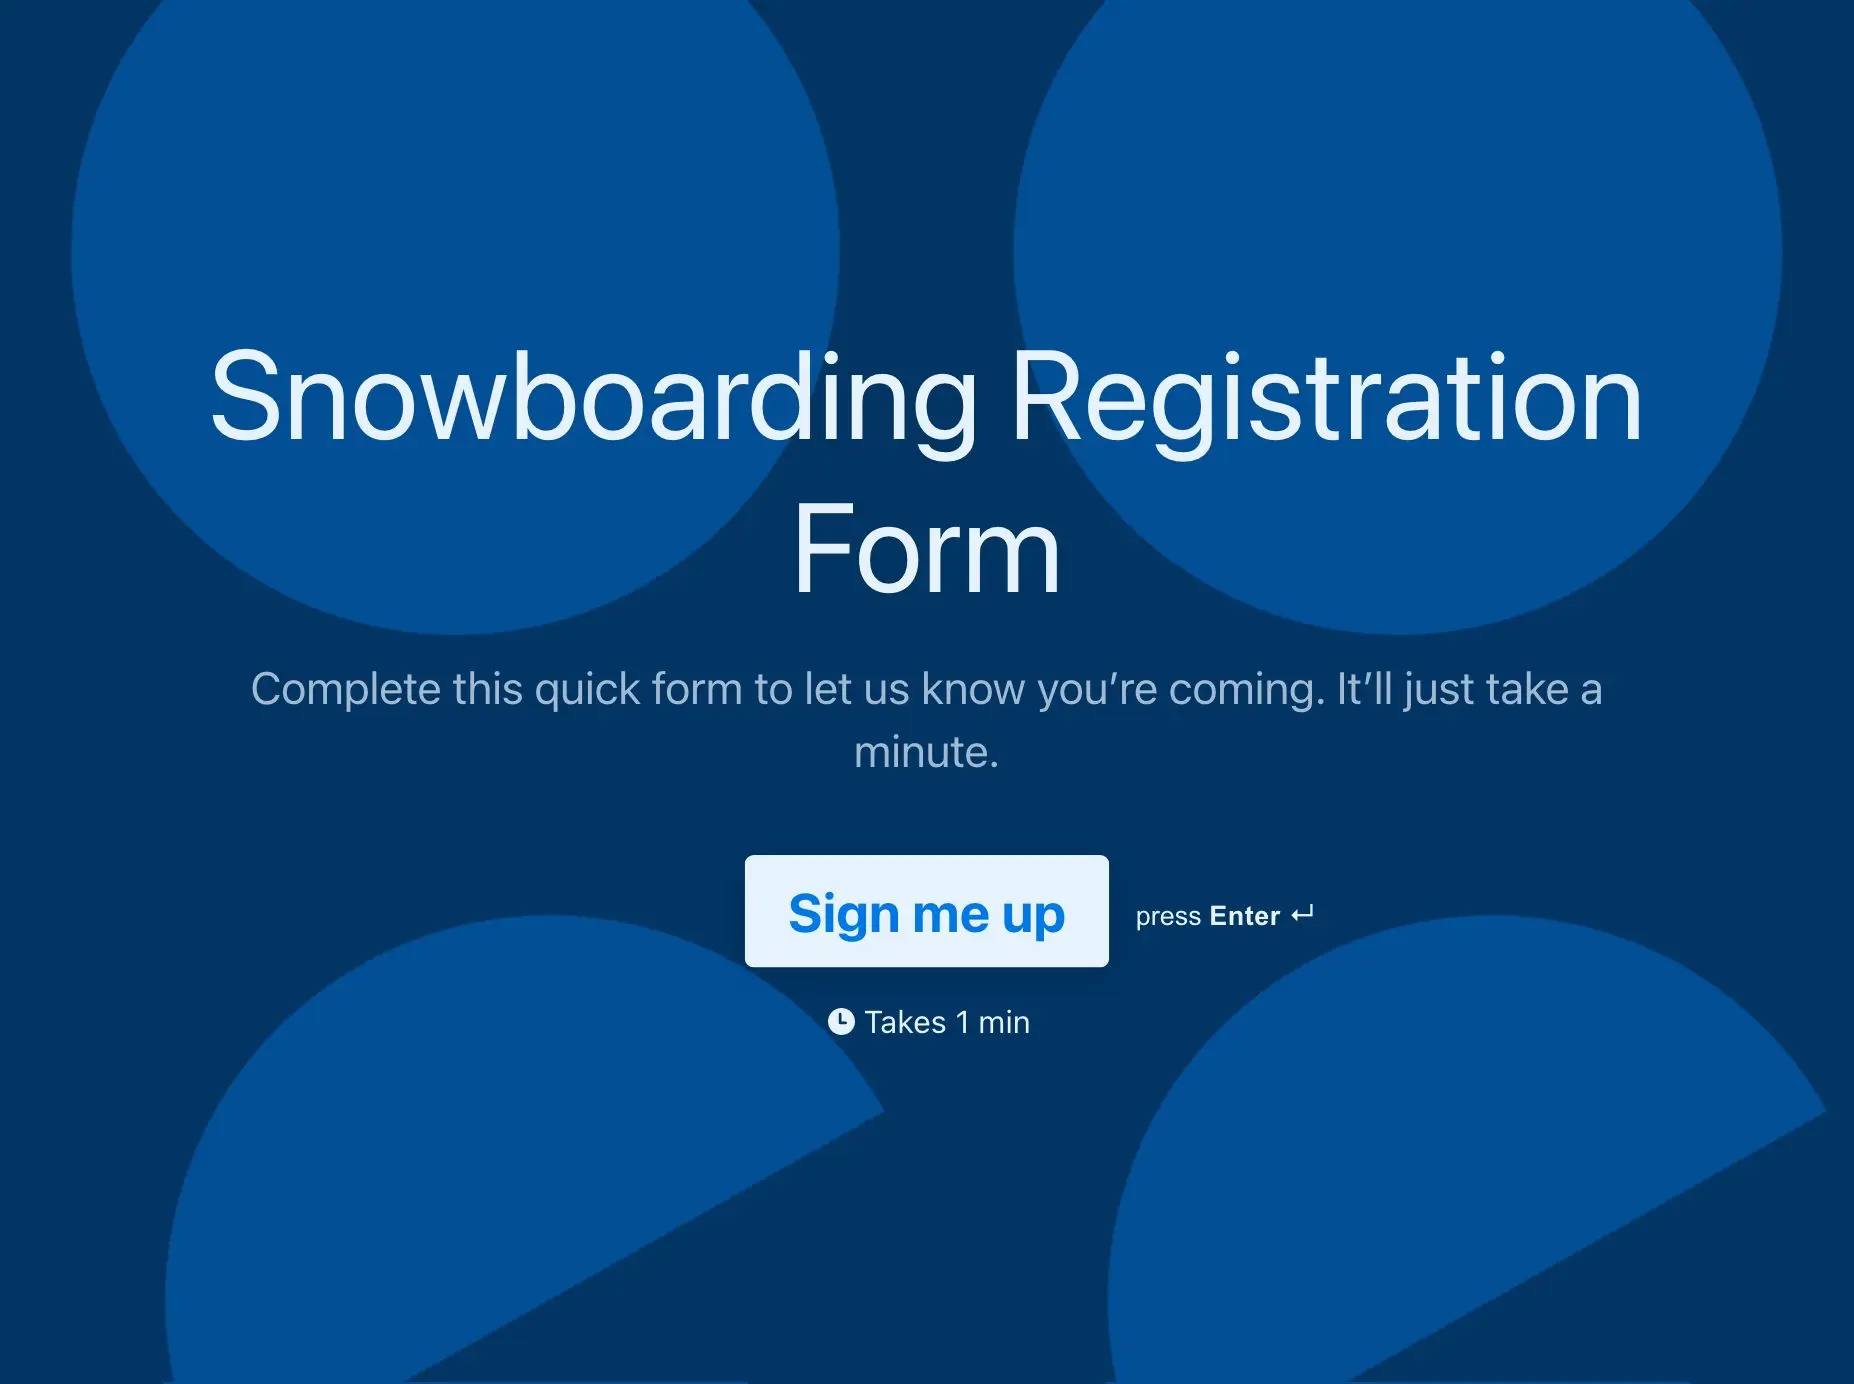 Snowboarding Registration Form Template Hero